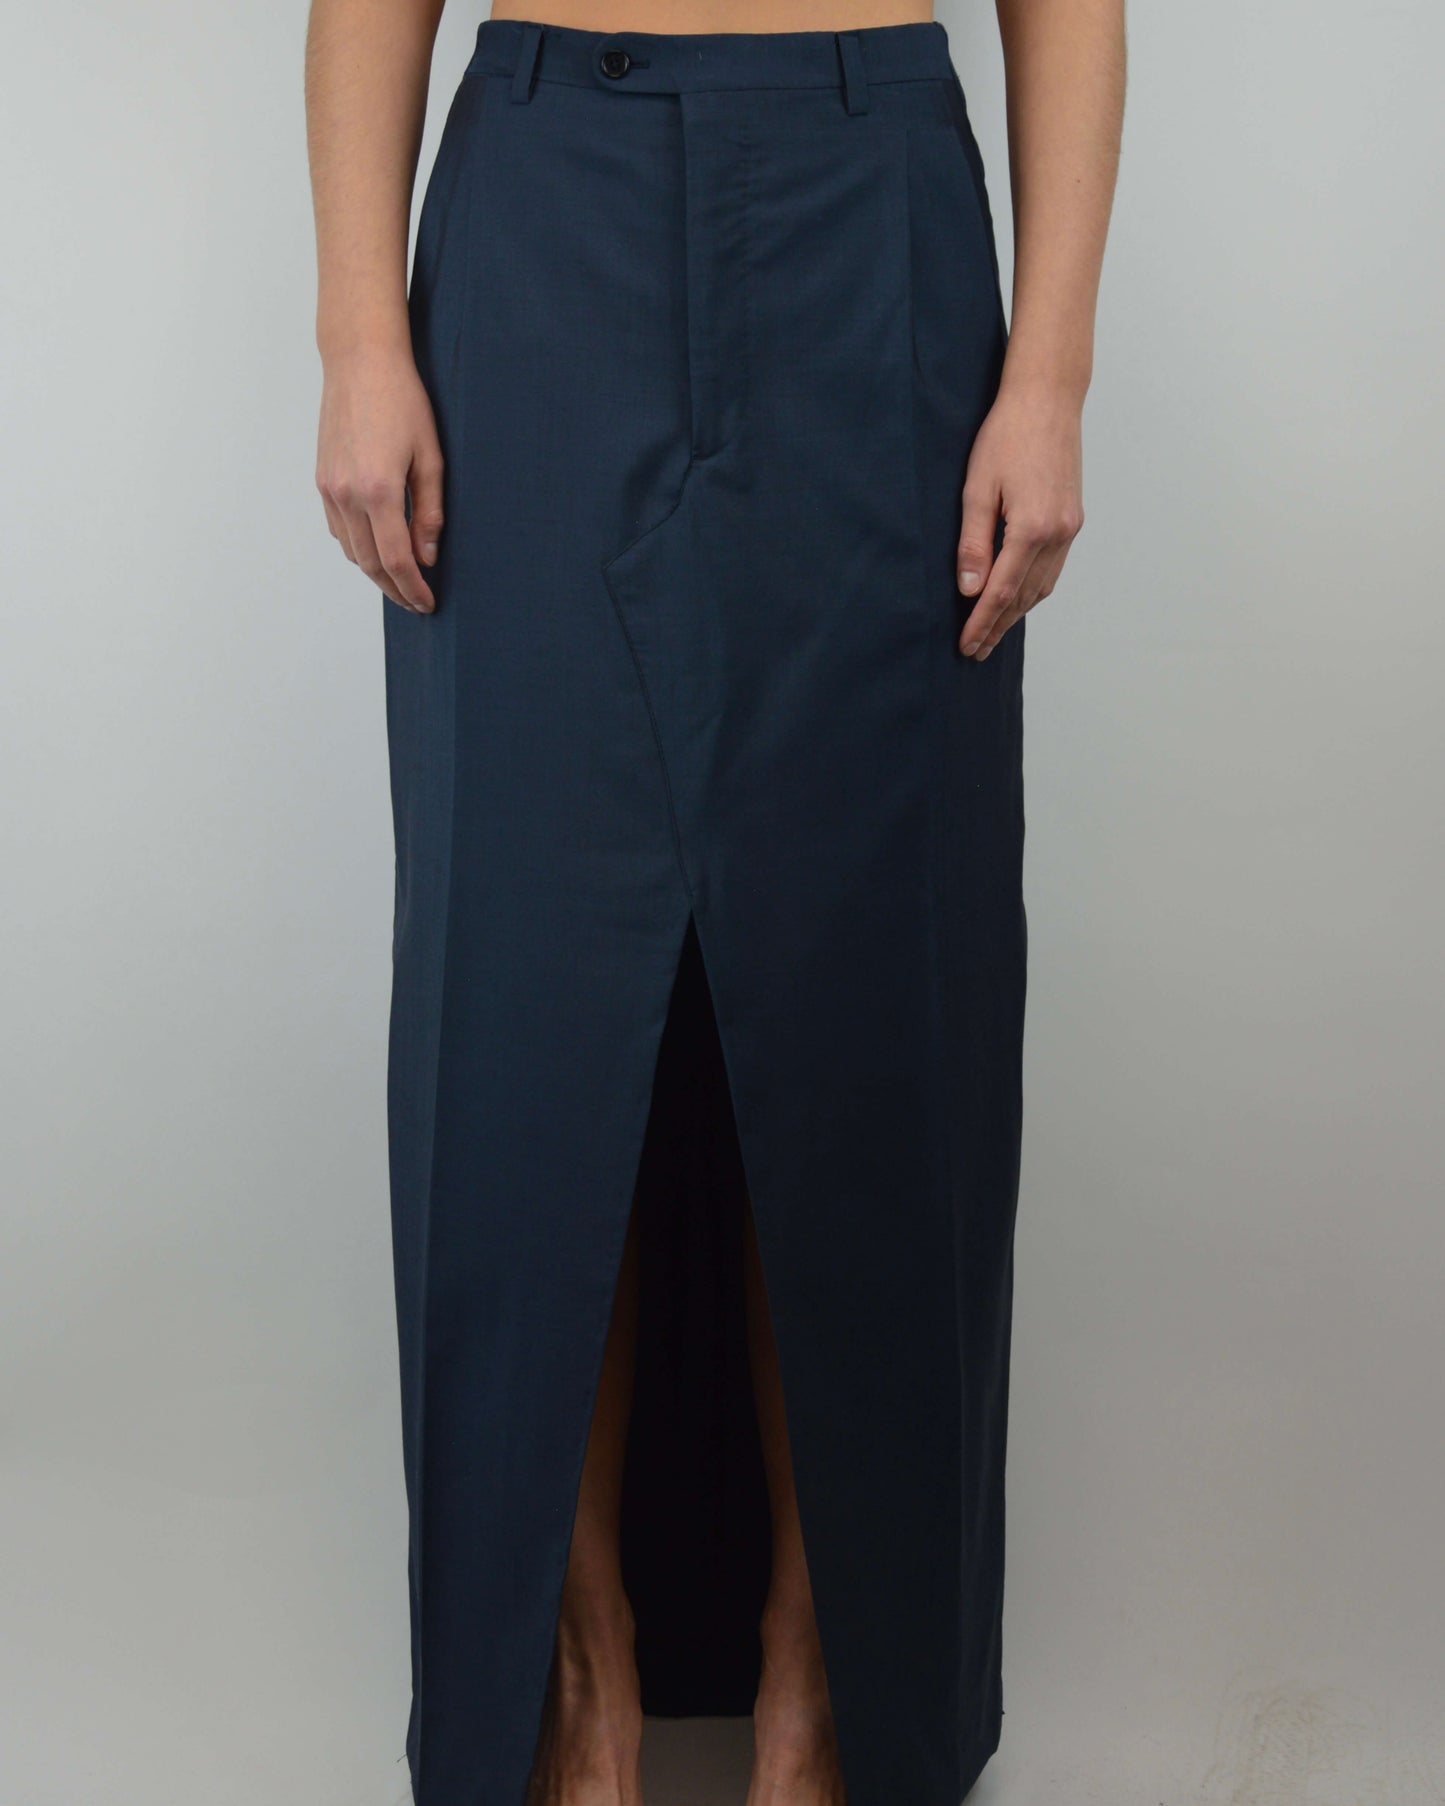 Long Skirt - Perfect Blue (S/M)